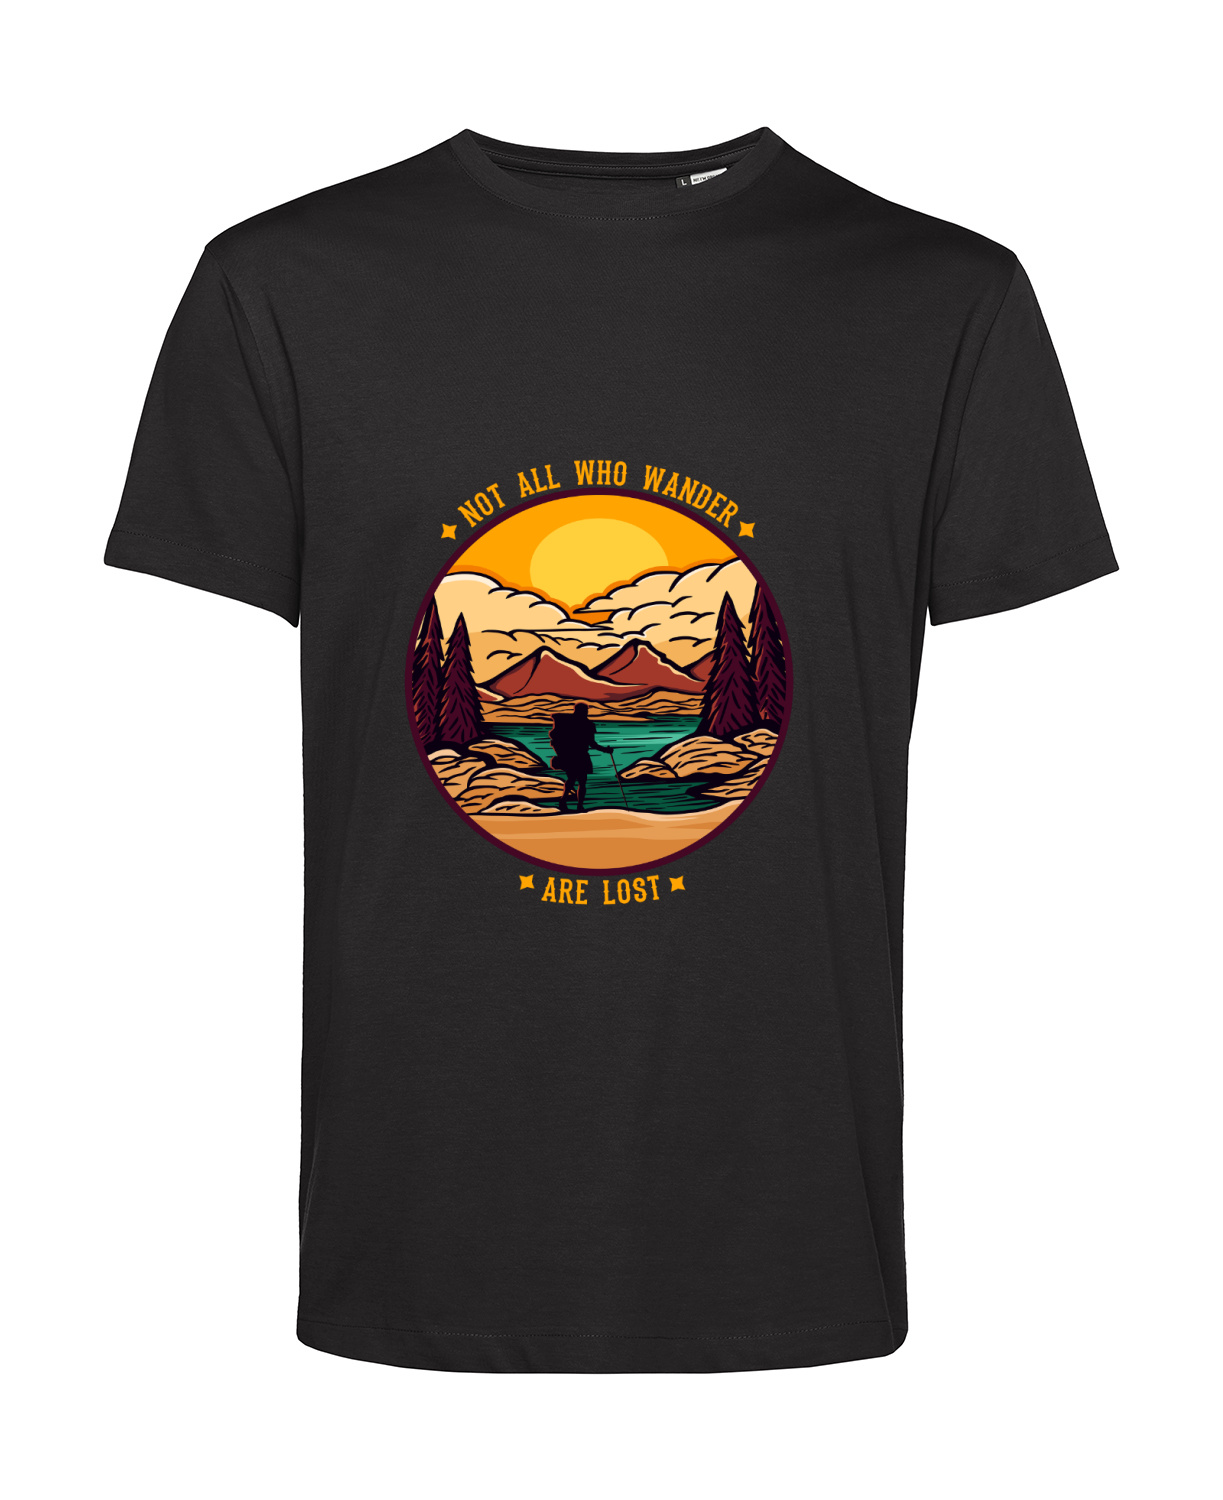 Nachhaltiges T-Shirt Herren Outdoor - Not all who wander are lost